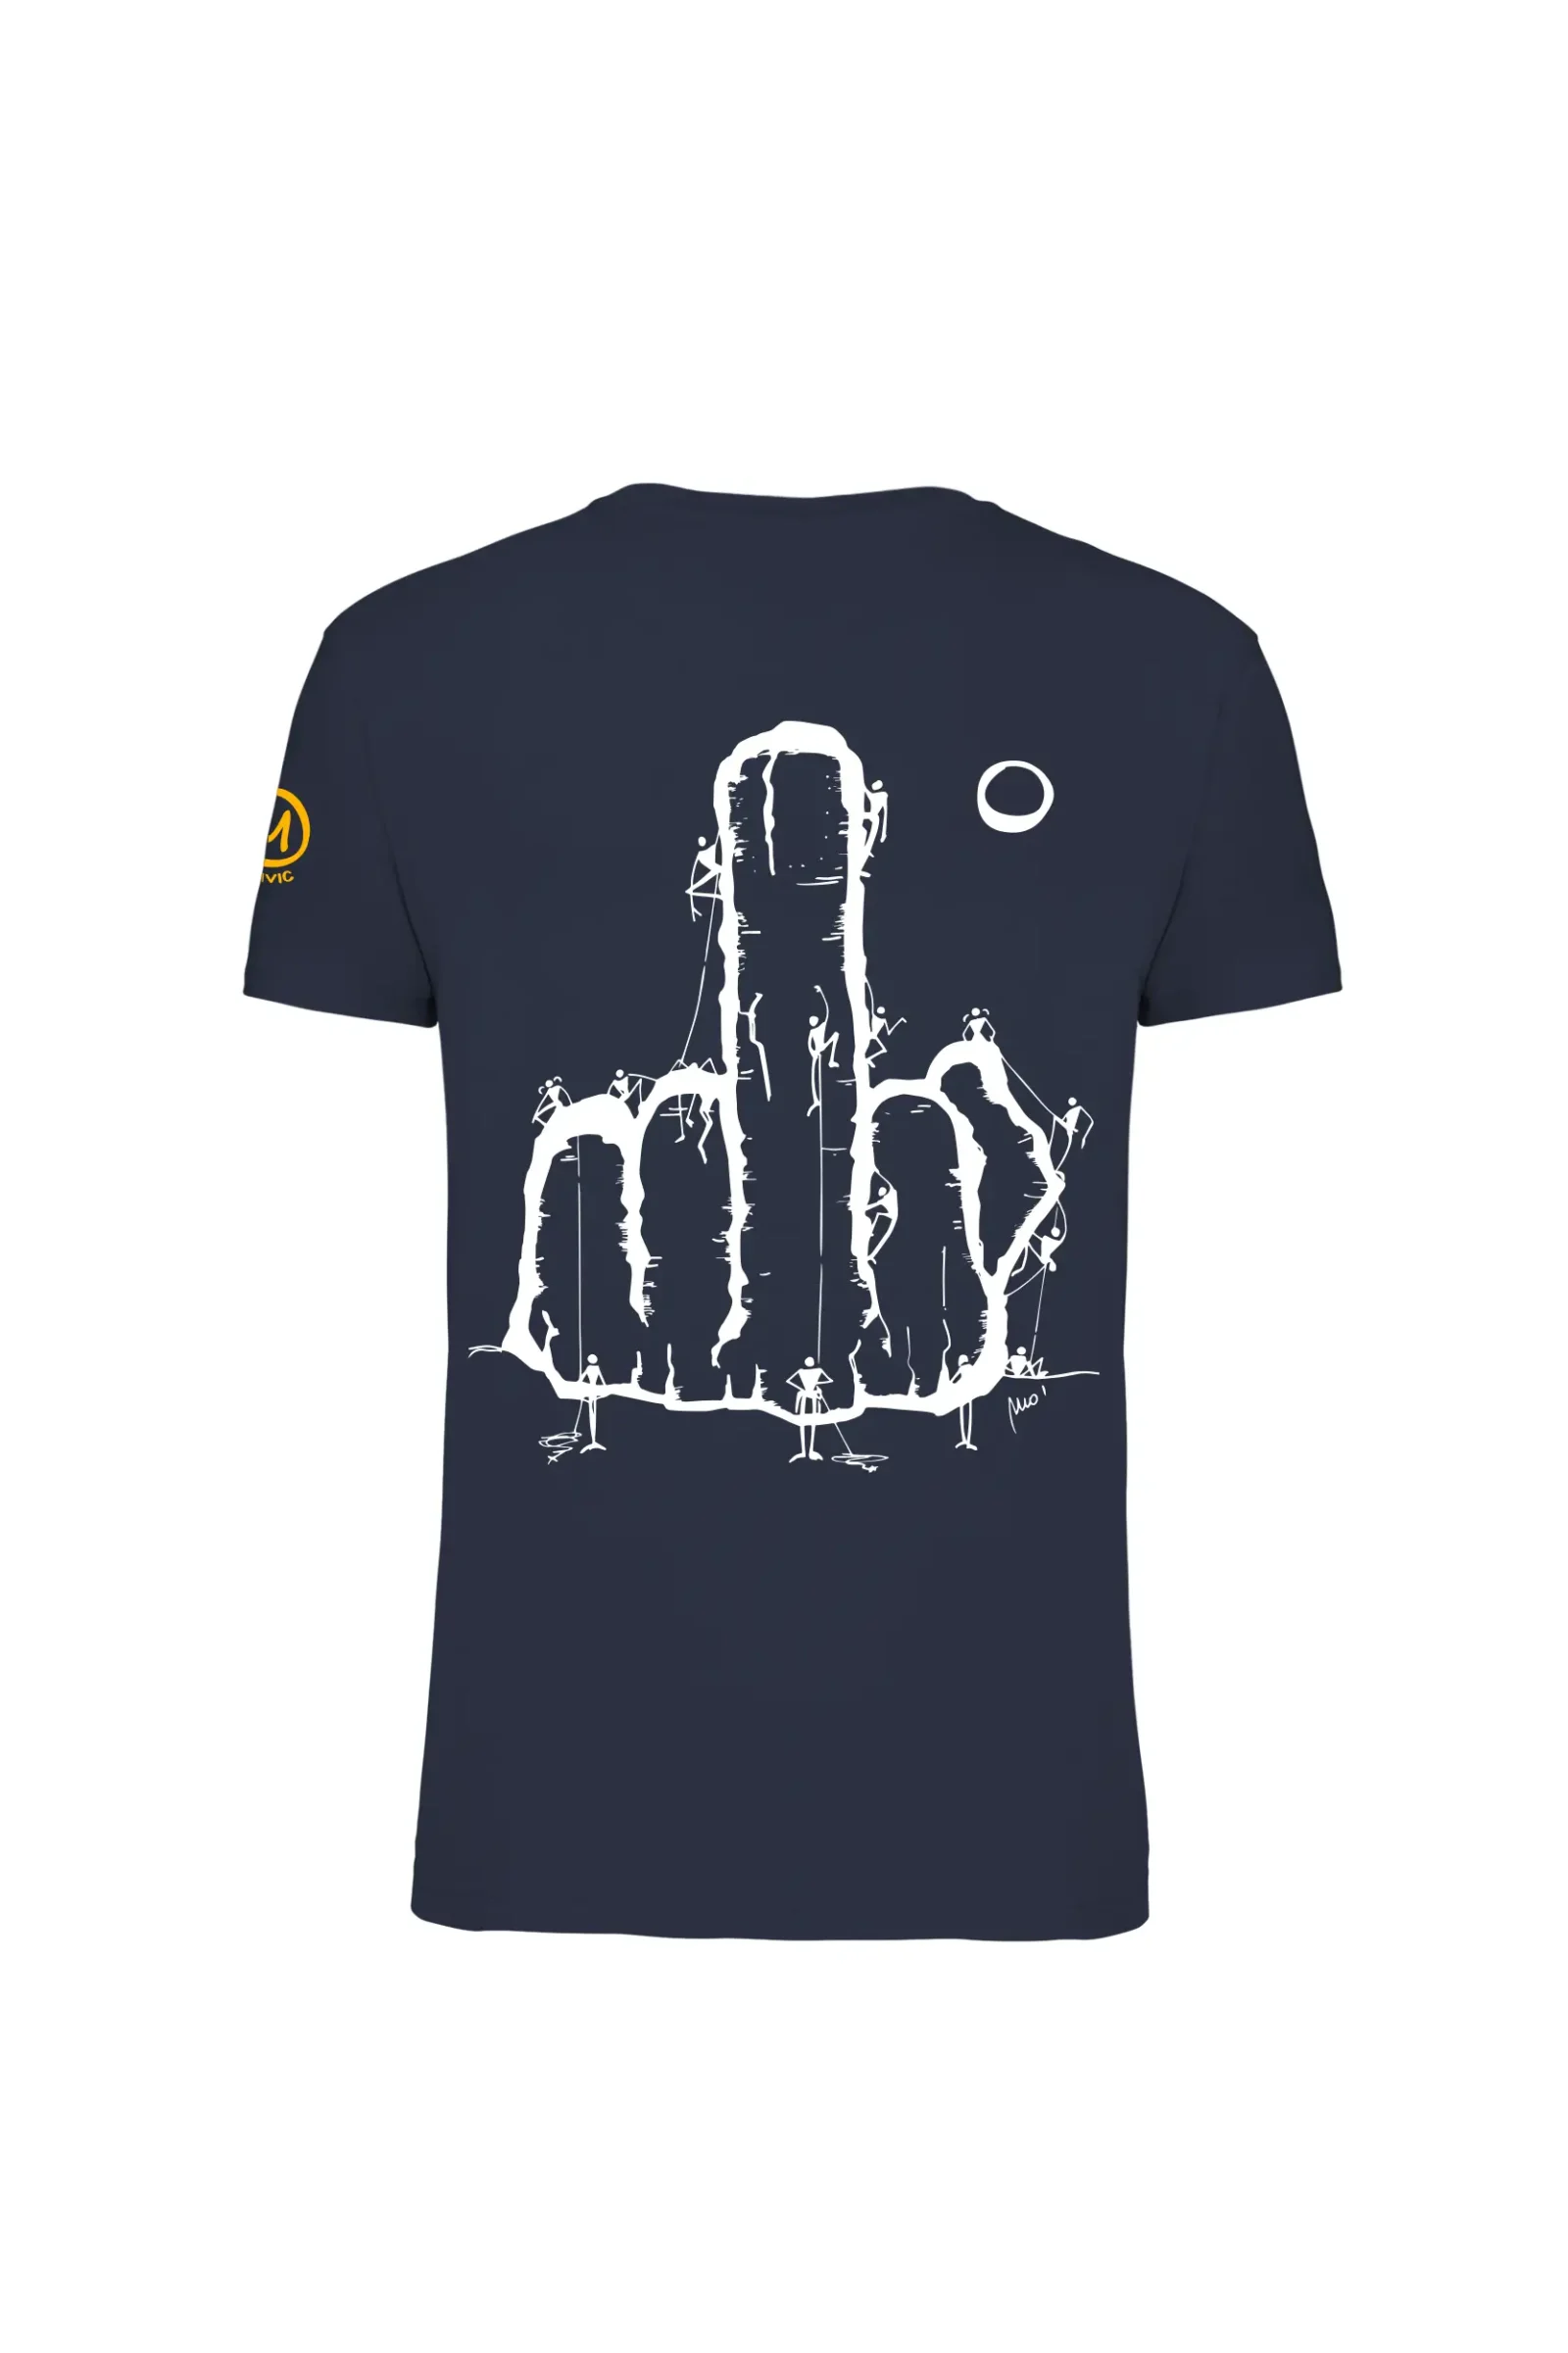 T-shirt arrampicata uomo - cotone blu navy - grafica "Fuck the System" - HASH MONVIC